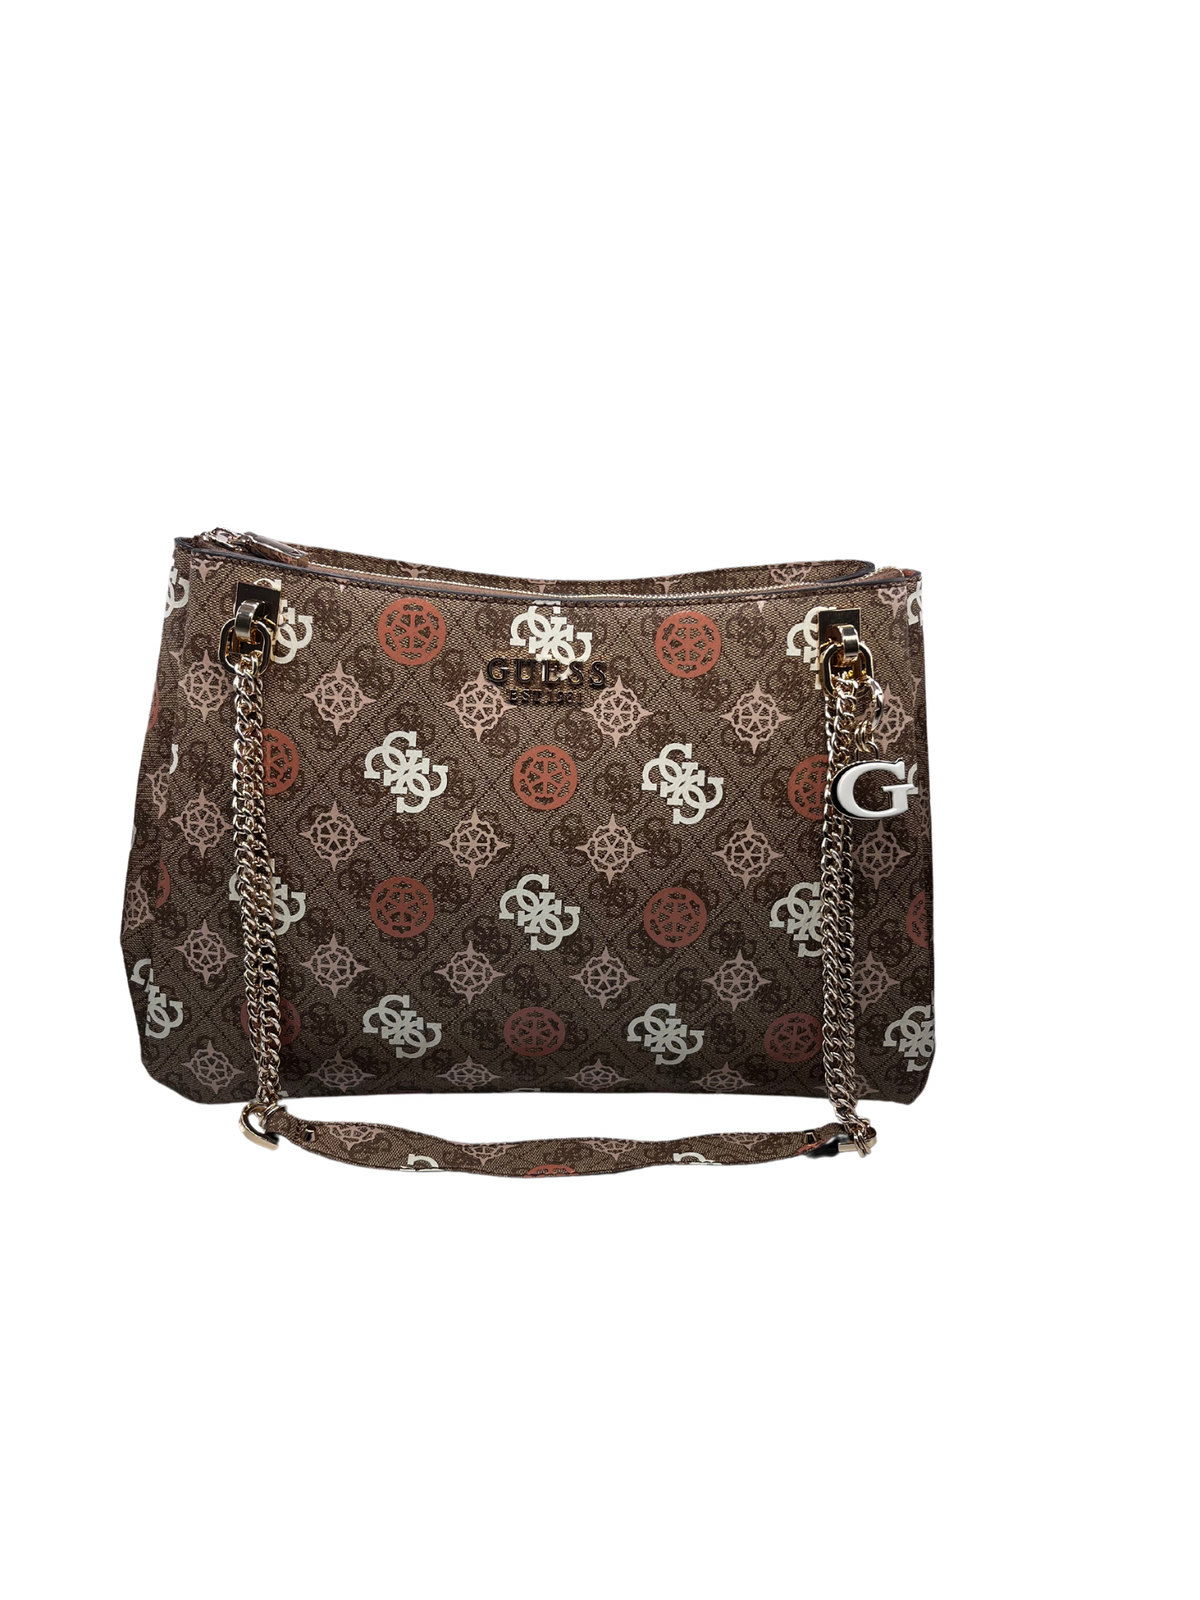 Guess Brown logo Handbag With Chain Strap (Medium)